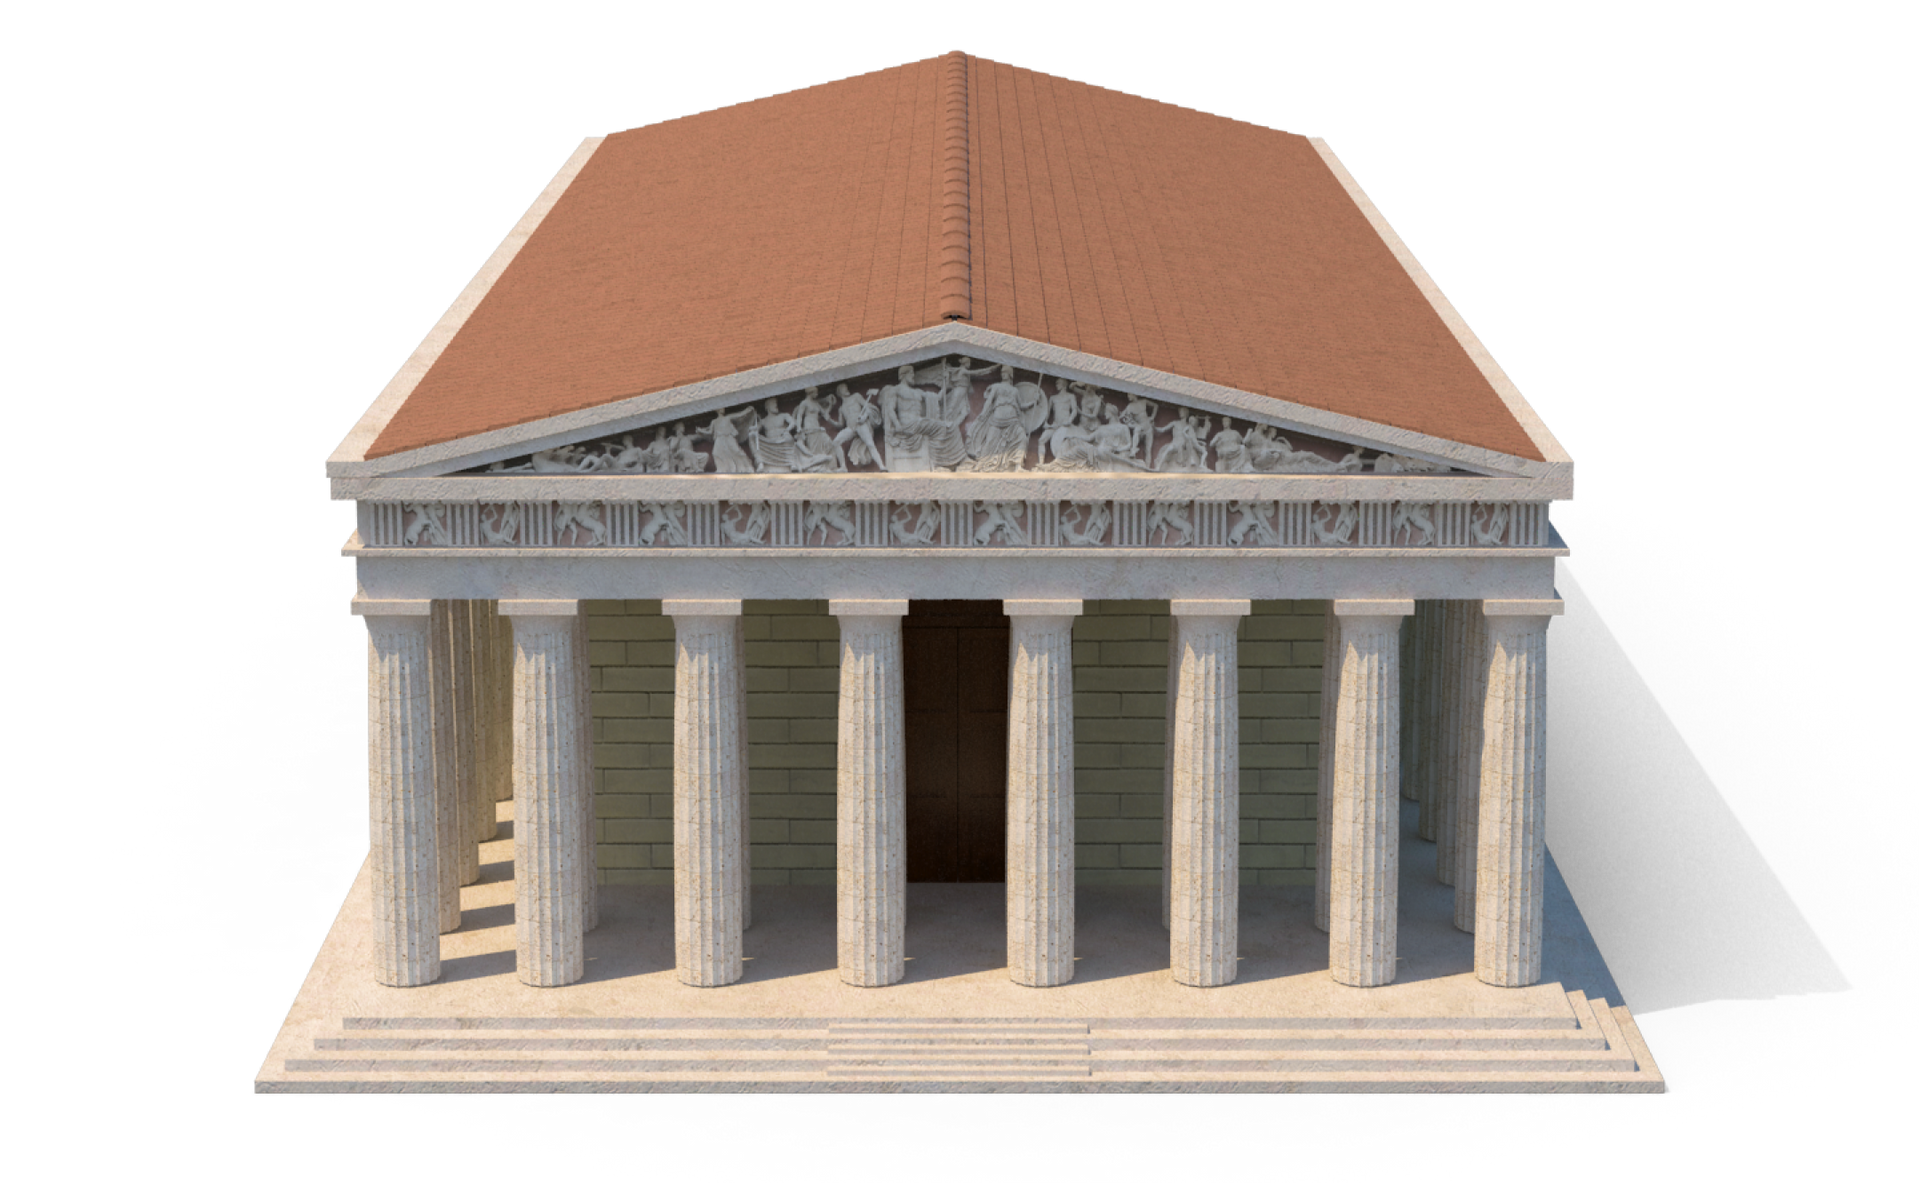 Image of a 3D model of a Greek agora